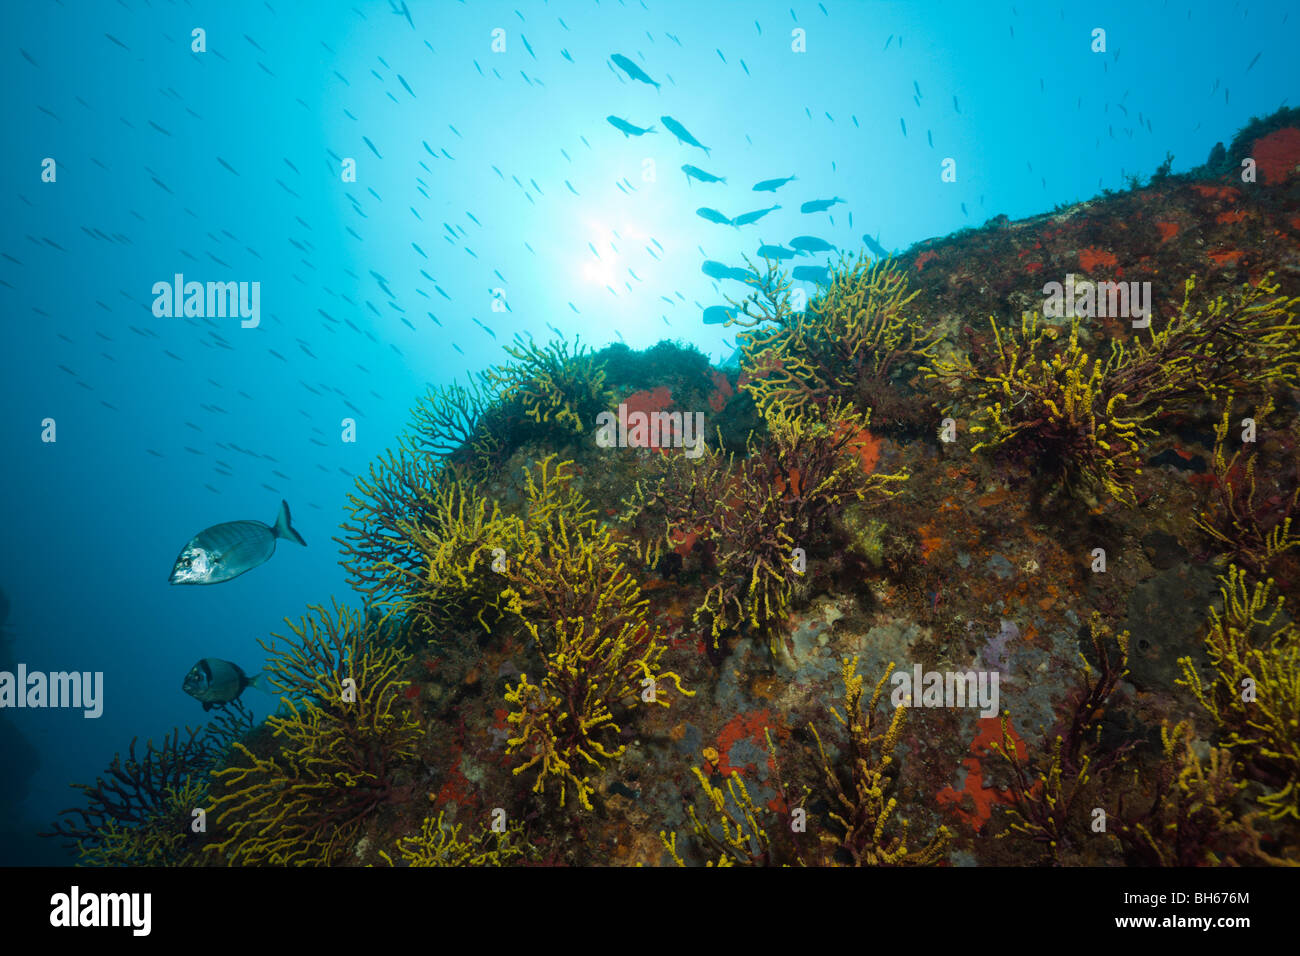 Reef with Variable Gorgonians, Paramuricea clavata, Tamariu, Costa Brava, Mediterranean Sea, Spain Stock Photo